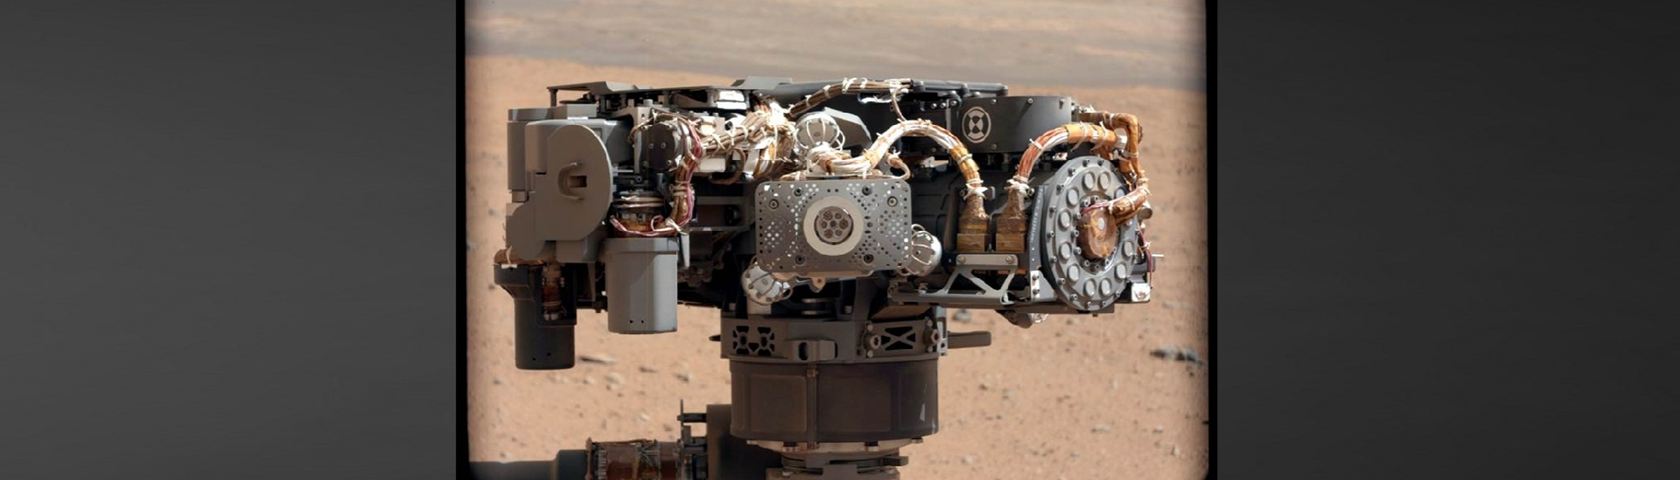 Curiosity Rover Self-Portrait